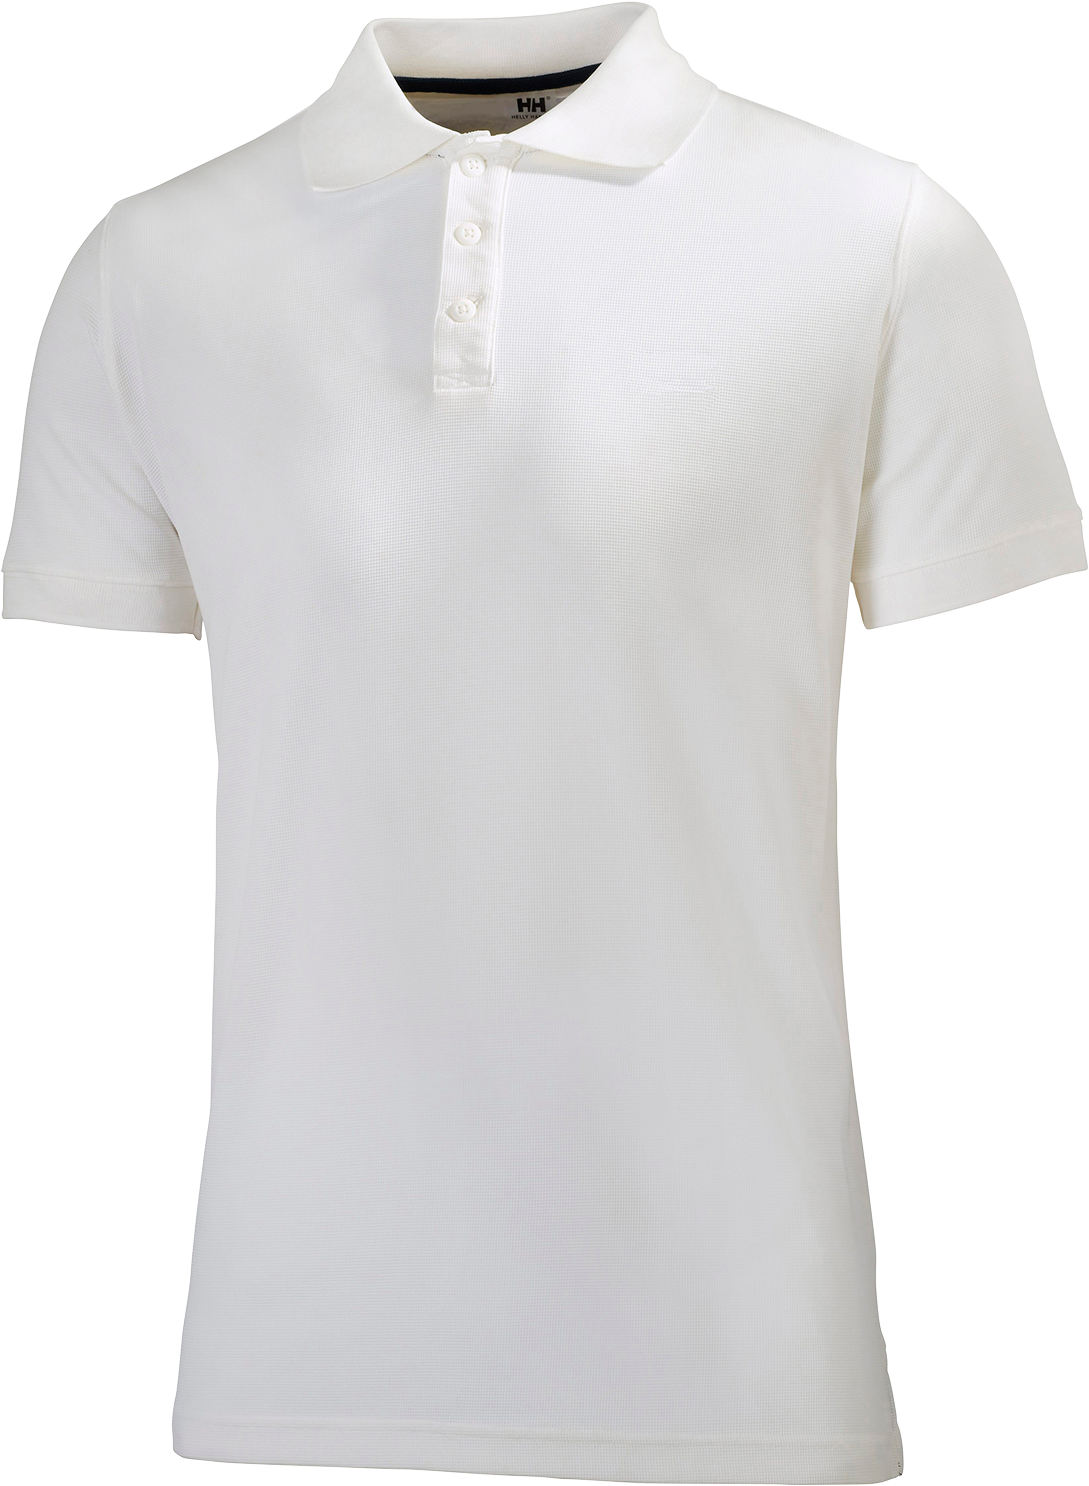 White Polo Shirt Product Display PNG image